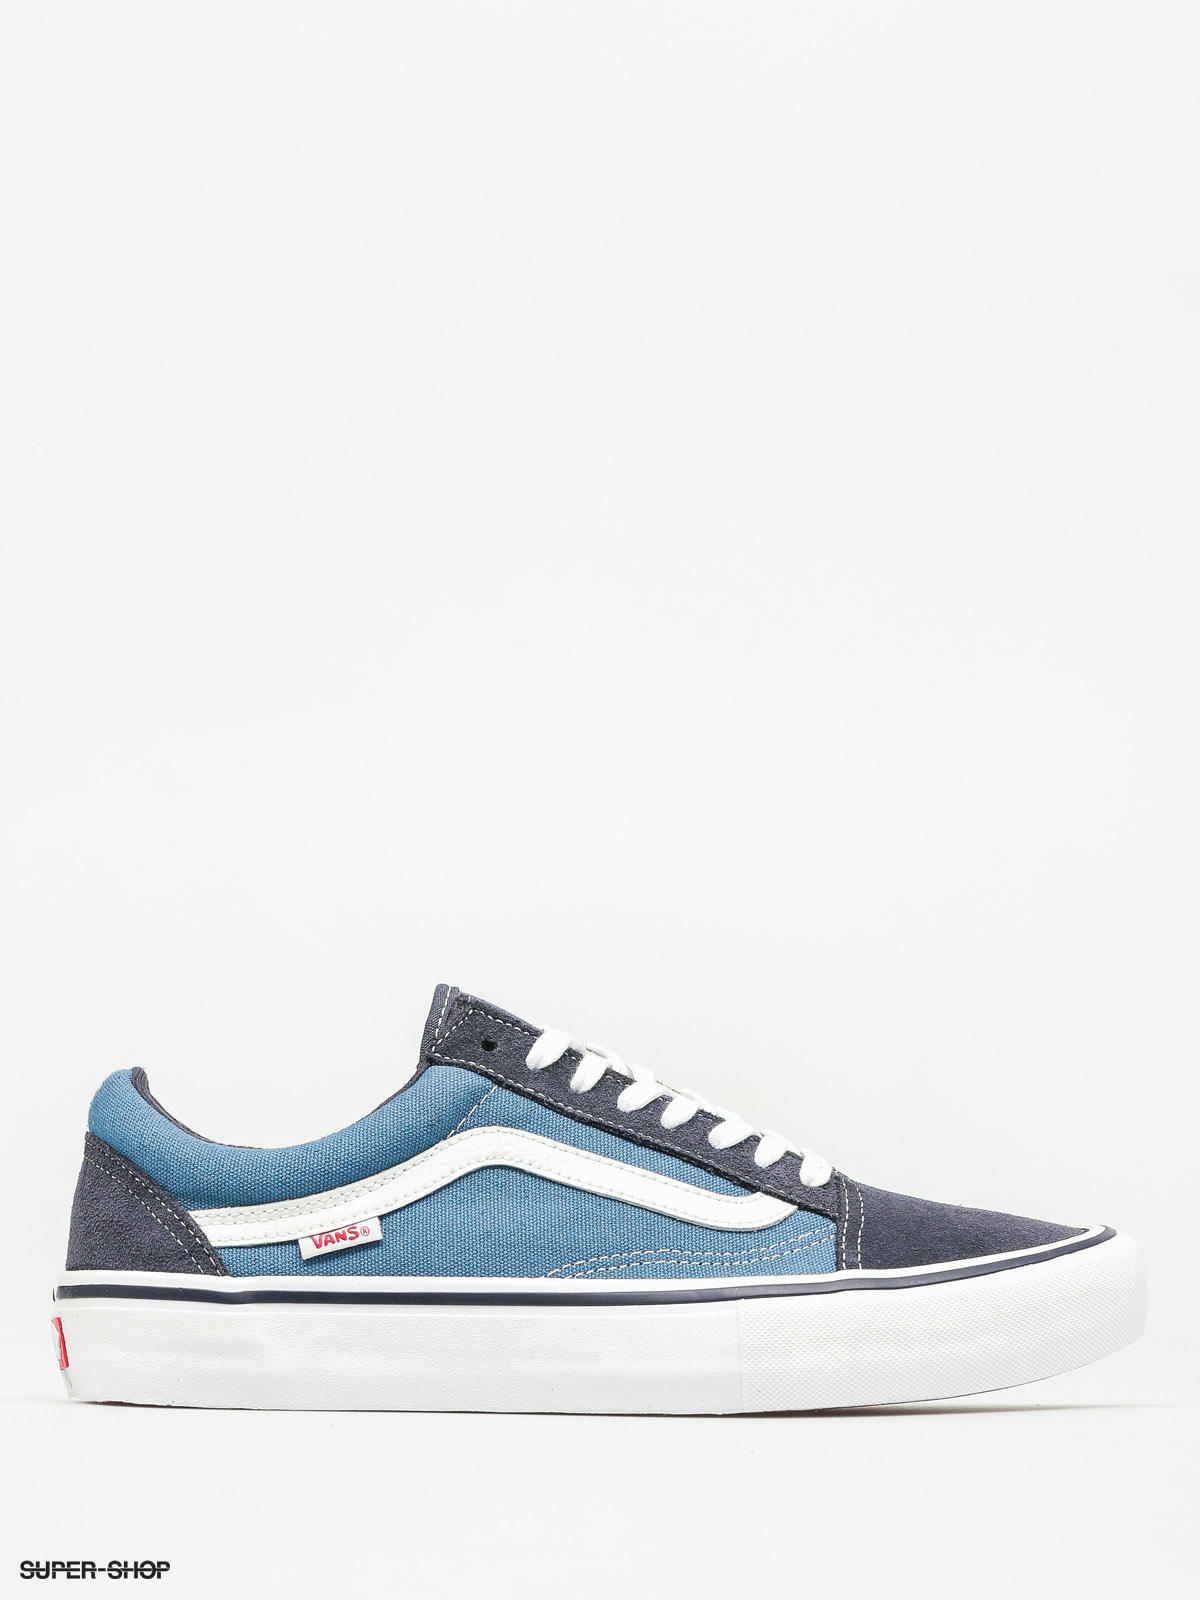 light blue and dark blue vans shoes